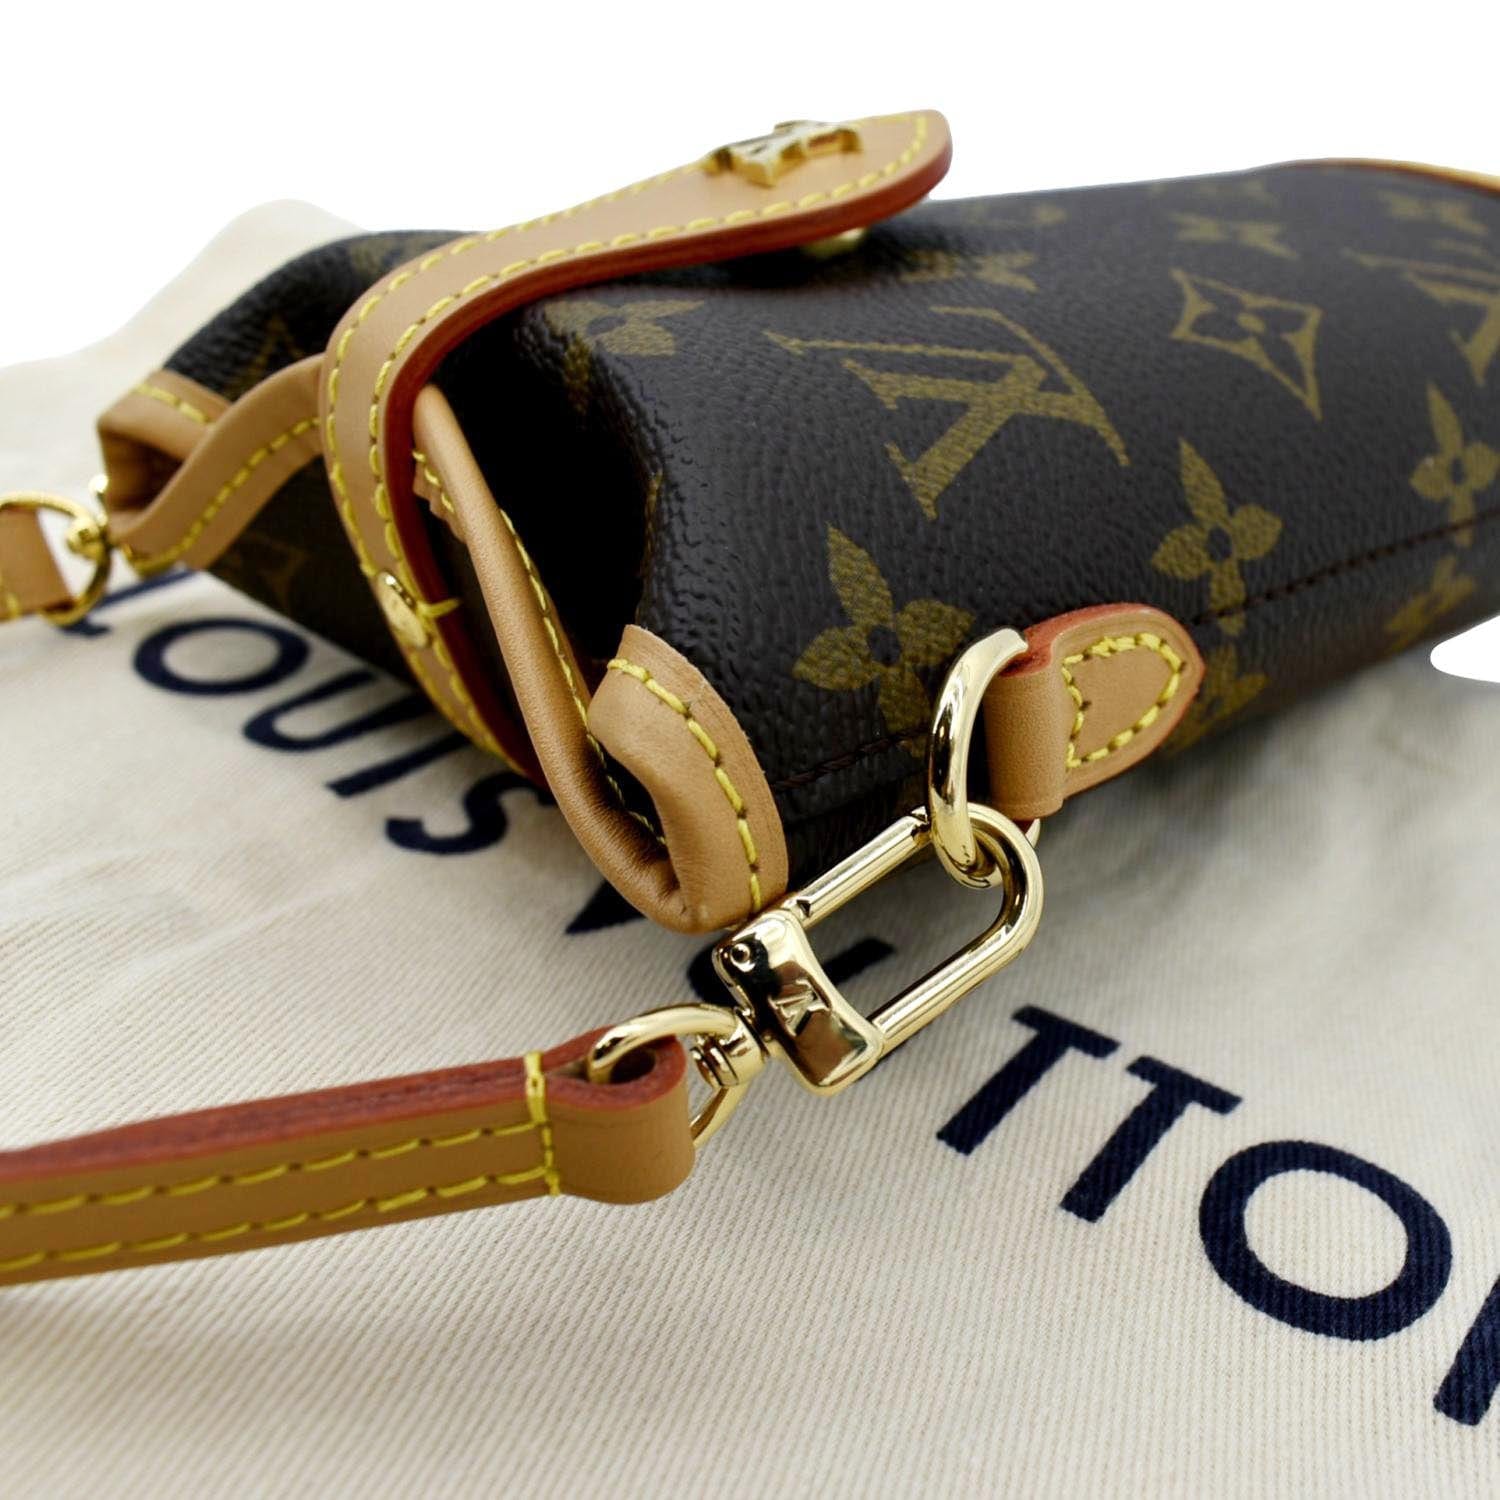 Louis Vuitton Fold Me Pouch - love the Lux